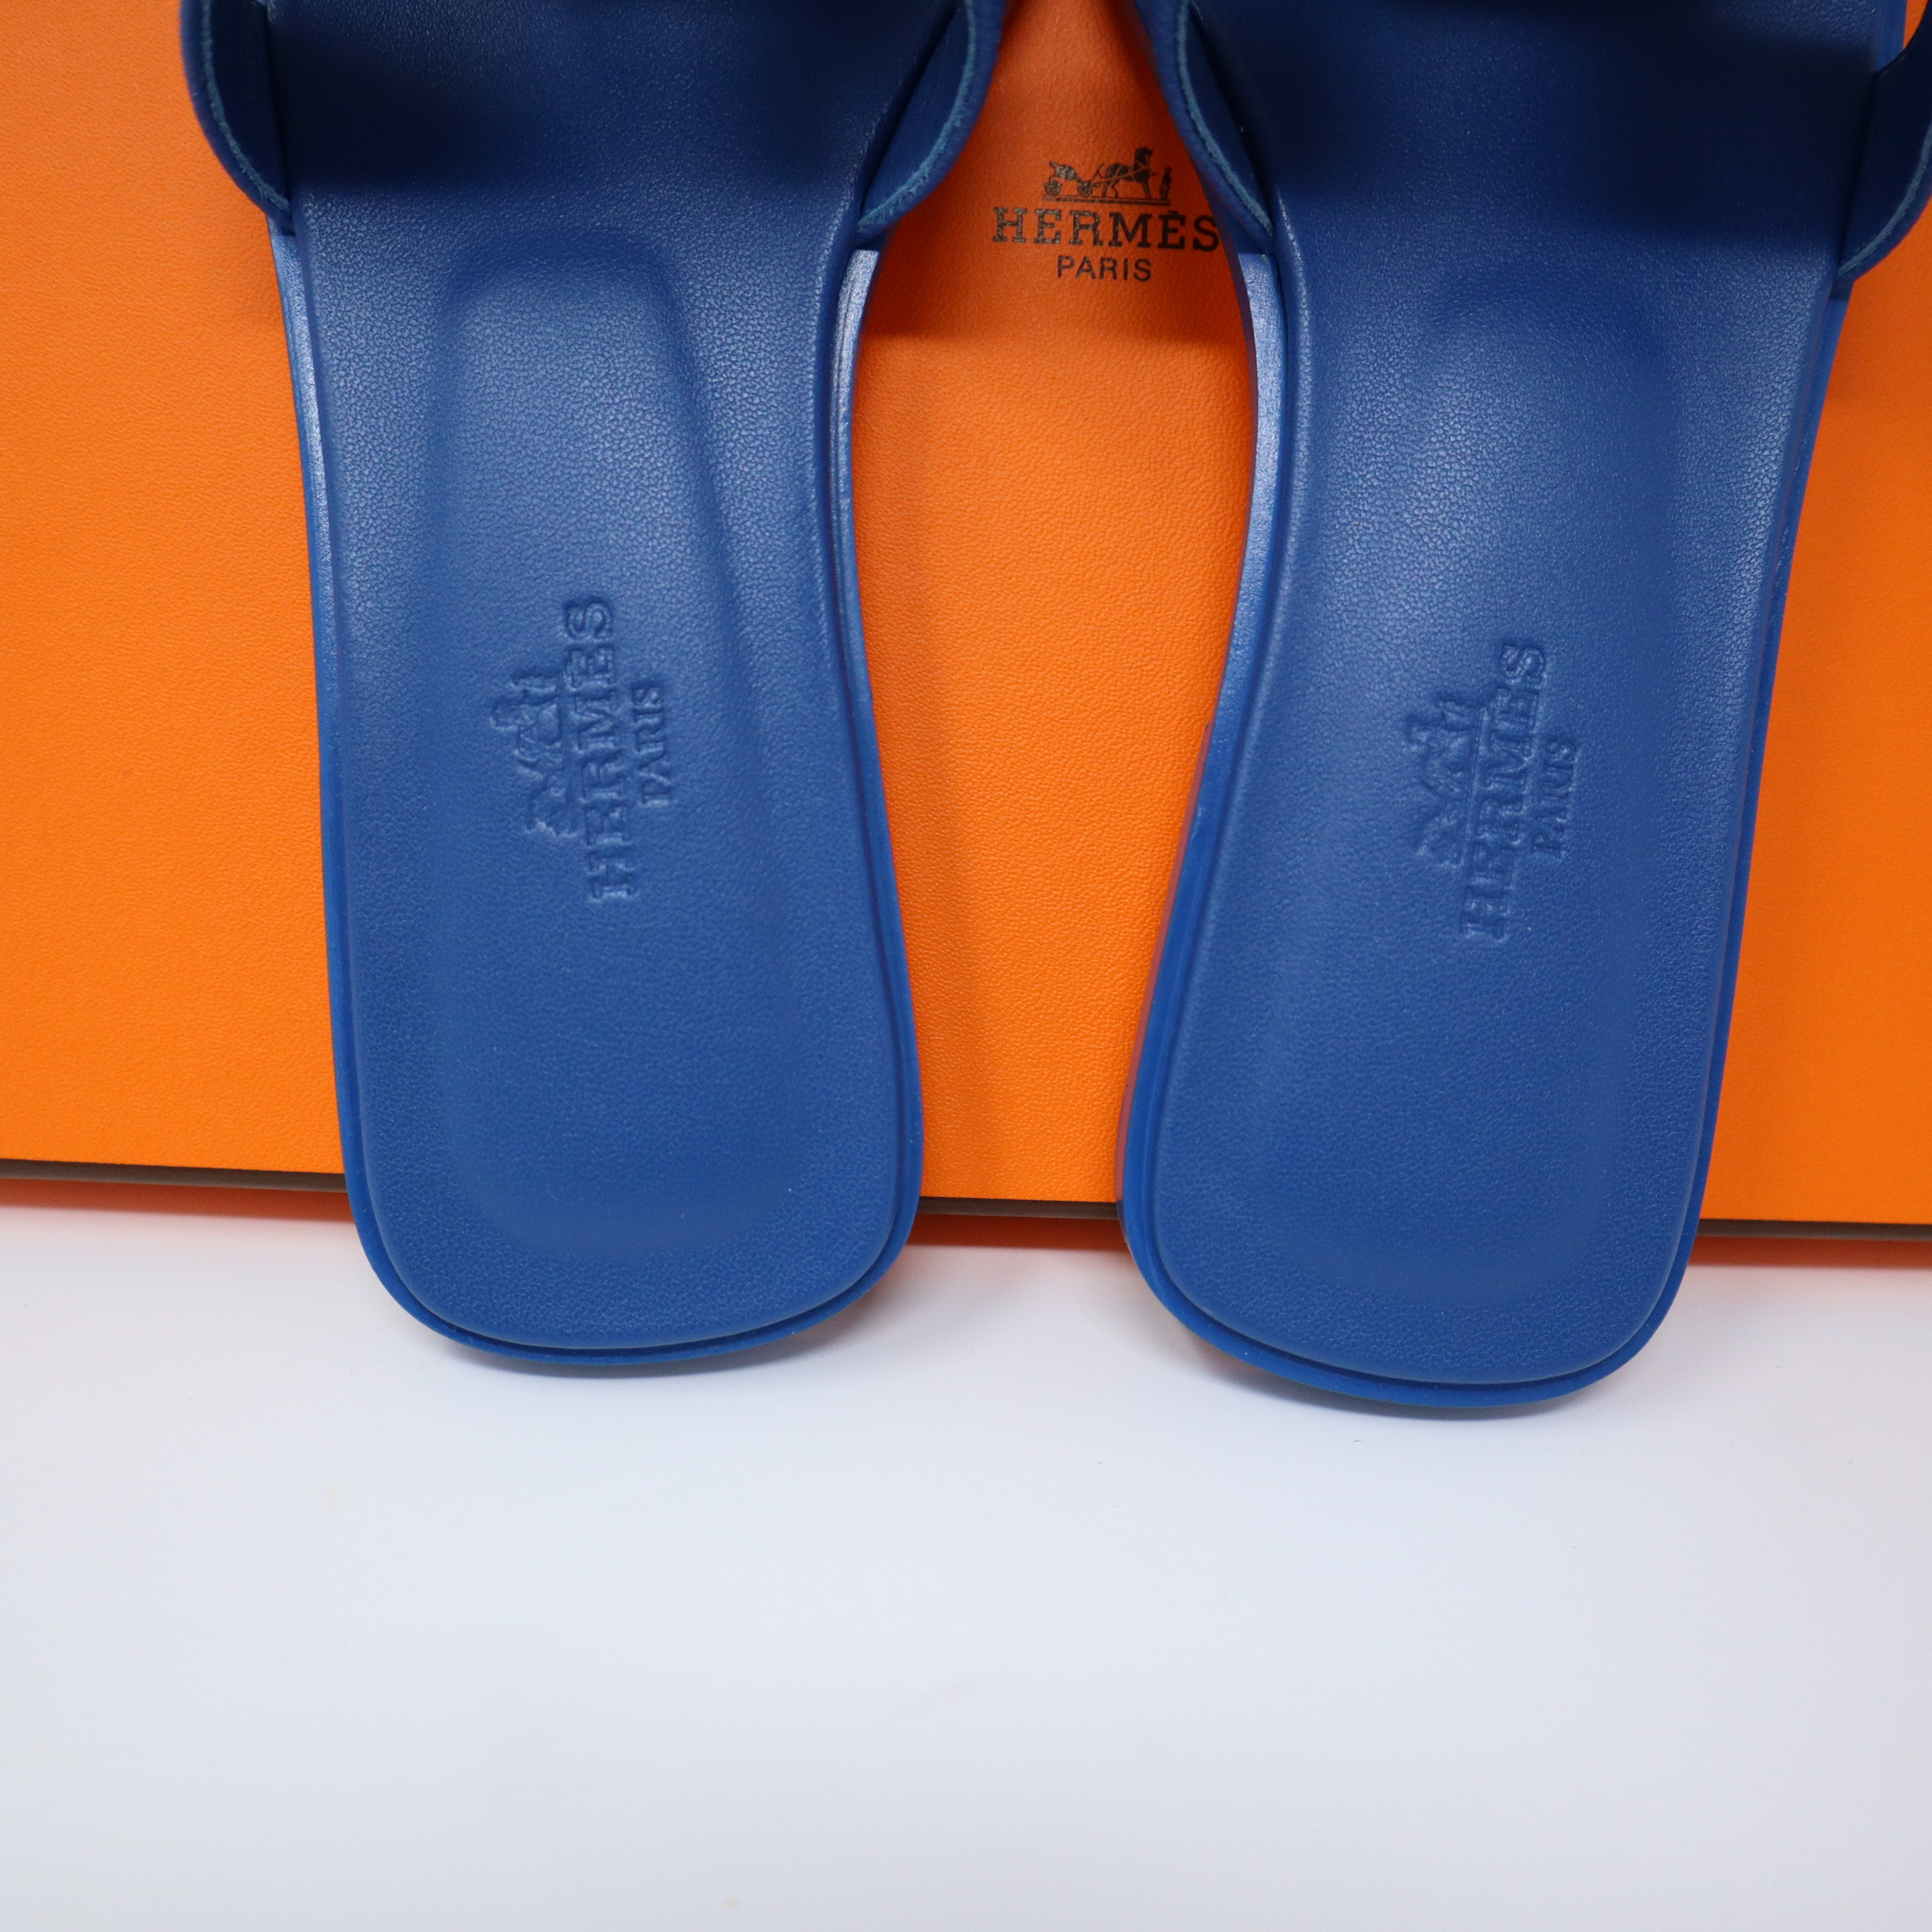 Hermes Oran Sandal Bleu Bleuet Epsom 38 EU